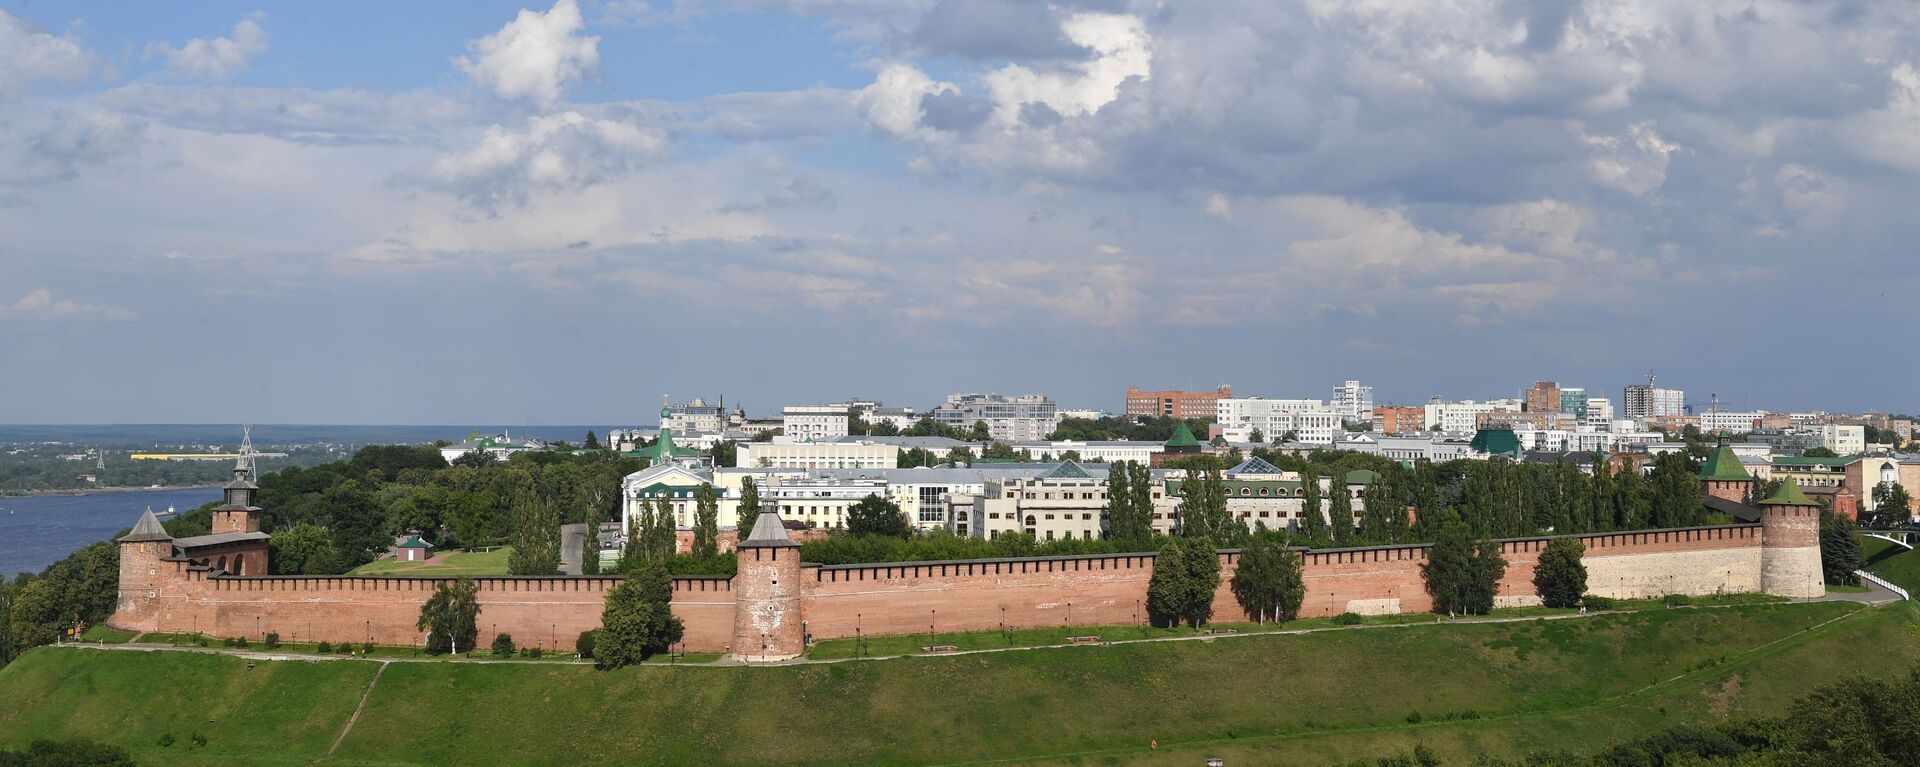 Tvrđava u Nižnjem Novgorodu - Sputnik Srbija, 1920, 25.08.2021